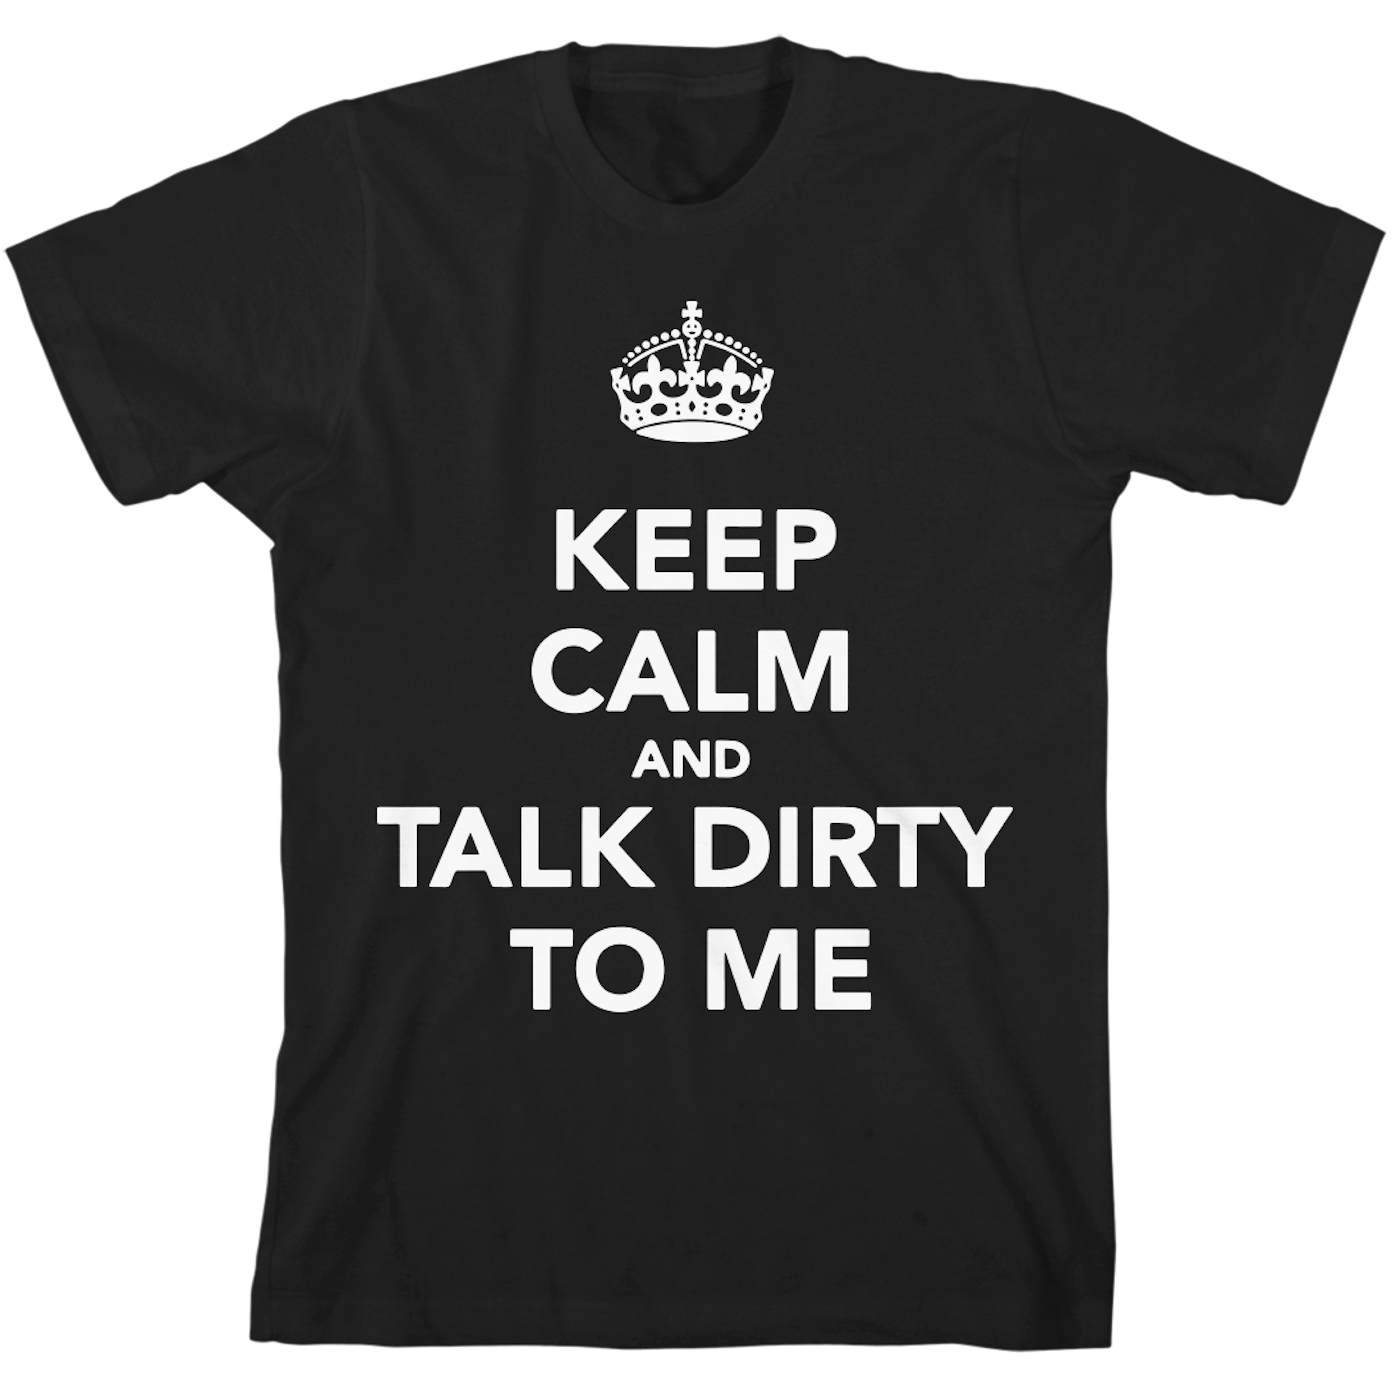 Jason Derulo Keep Calm Unisex T-Shirt